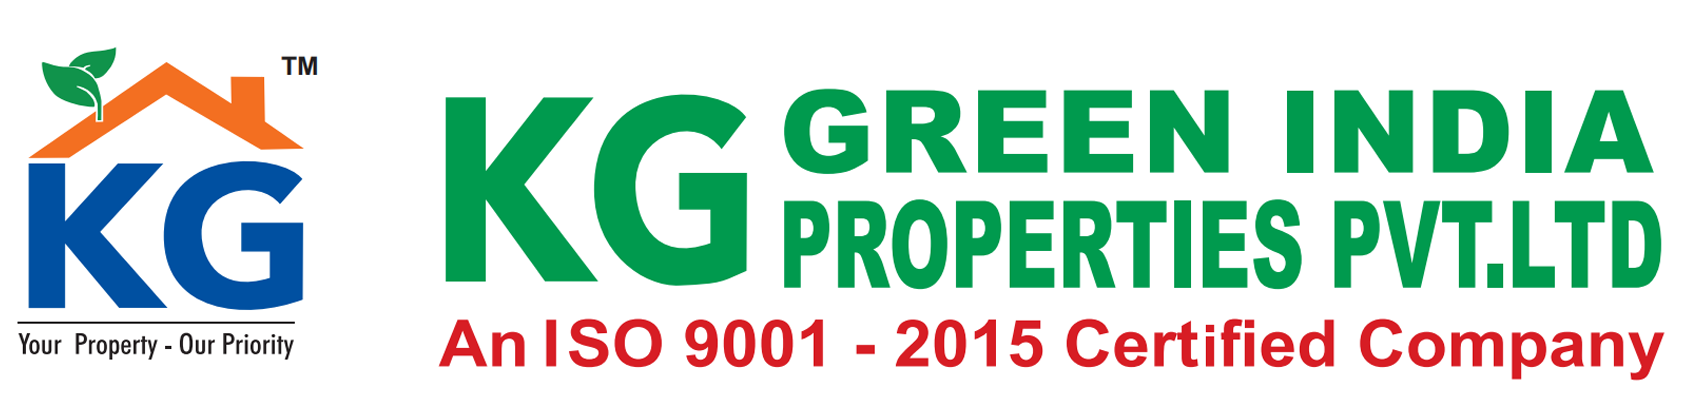 KG Green India Properities-8489777771